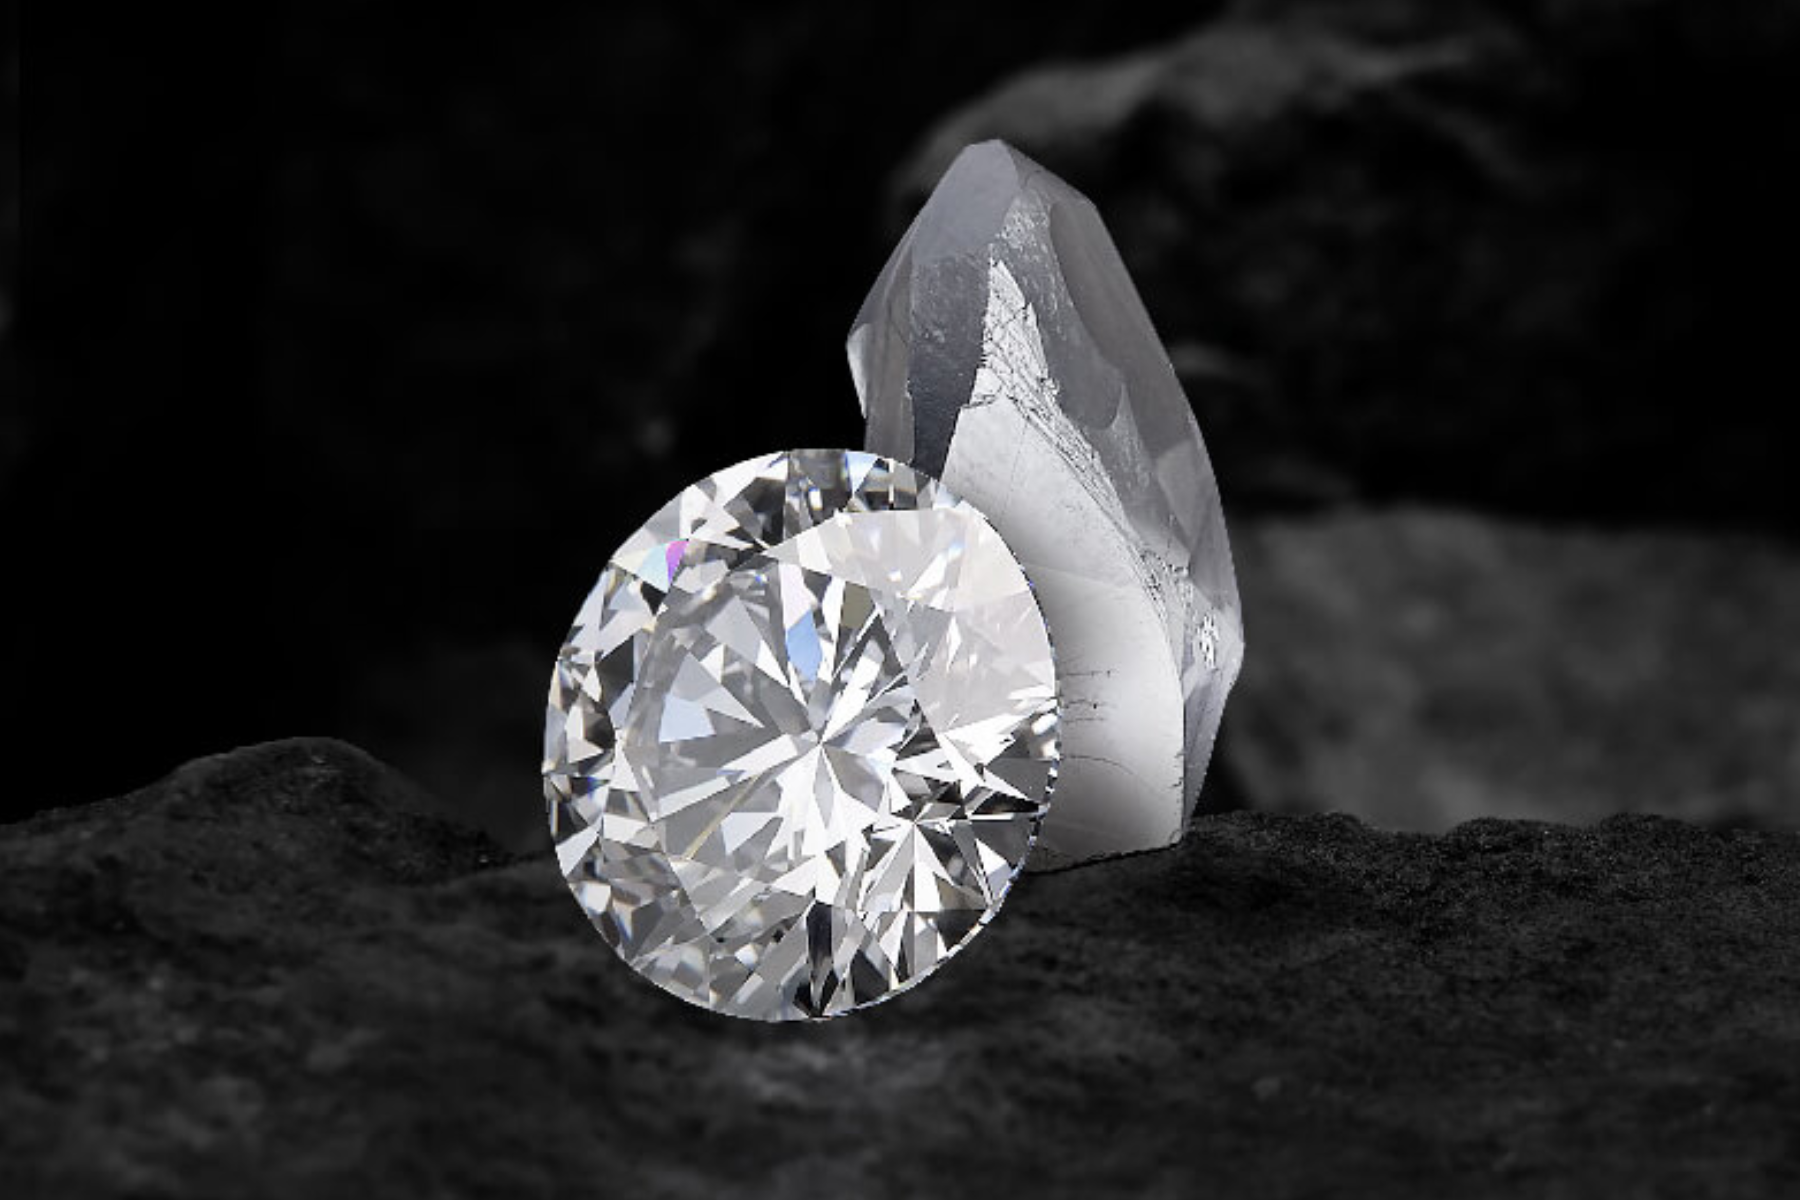 A raw and treated diamonds from Botswana